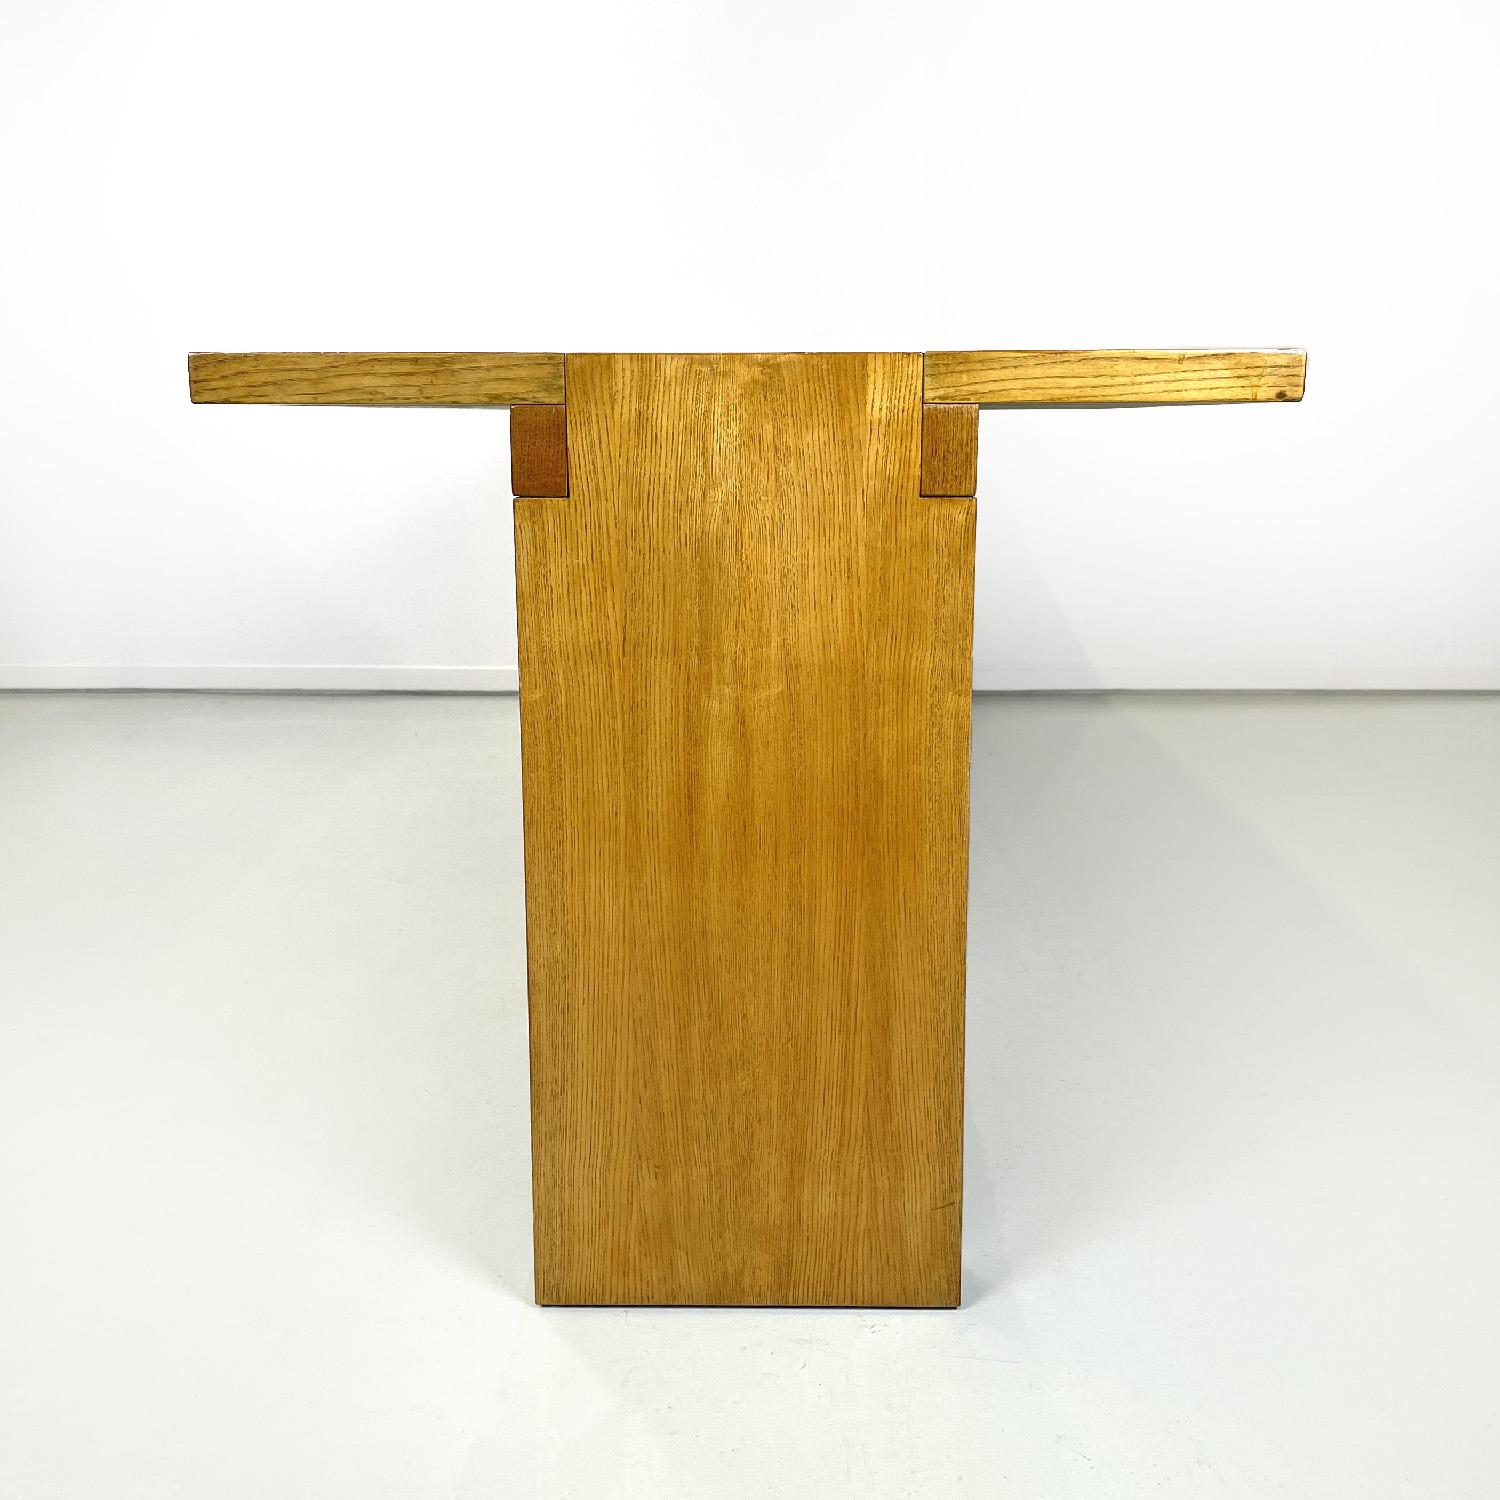 Late 20th Century Italian modern wooden dining table Valmarana by Carlo Scarpa for Gavina, 1970s